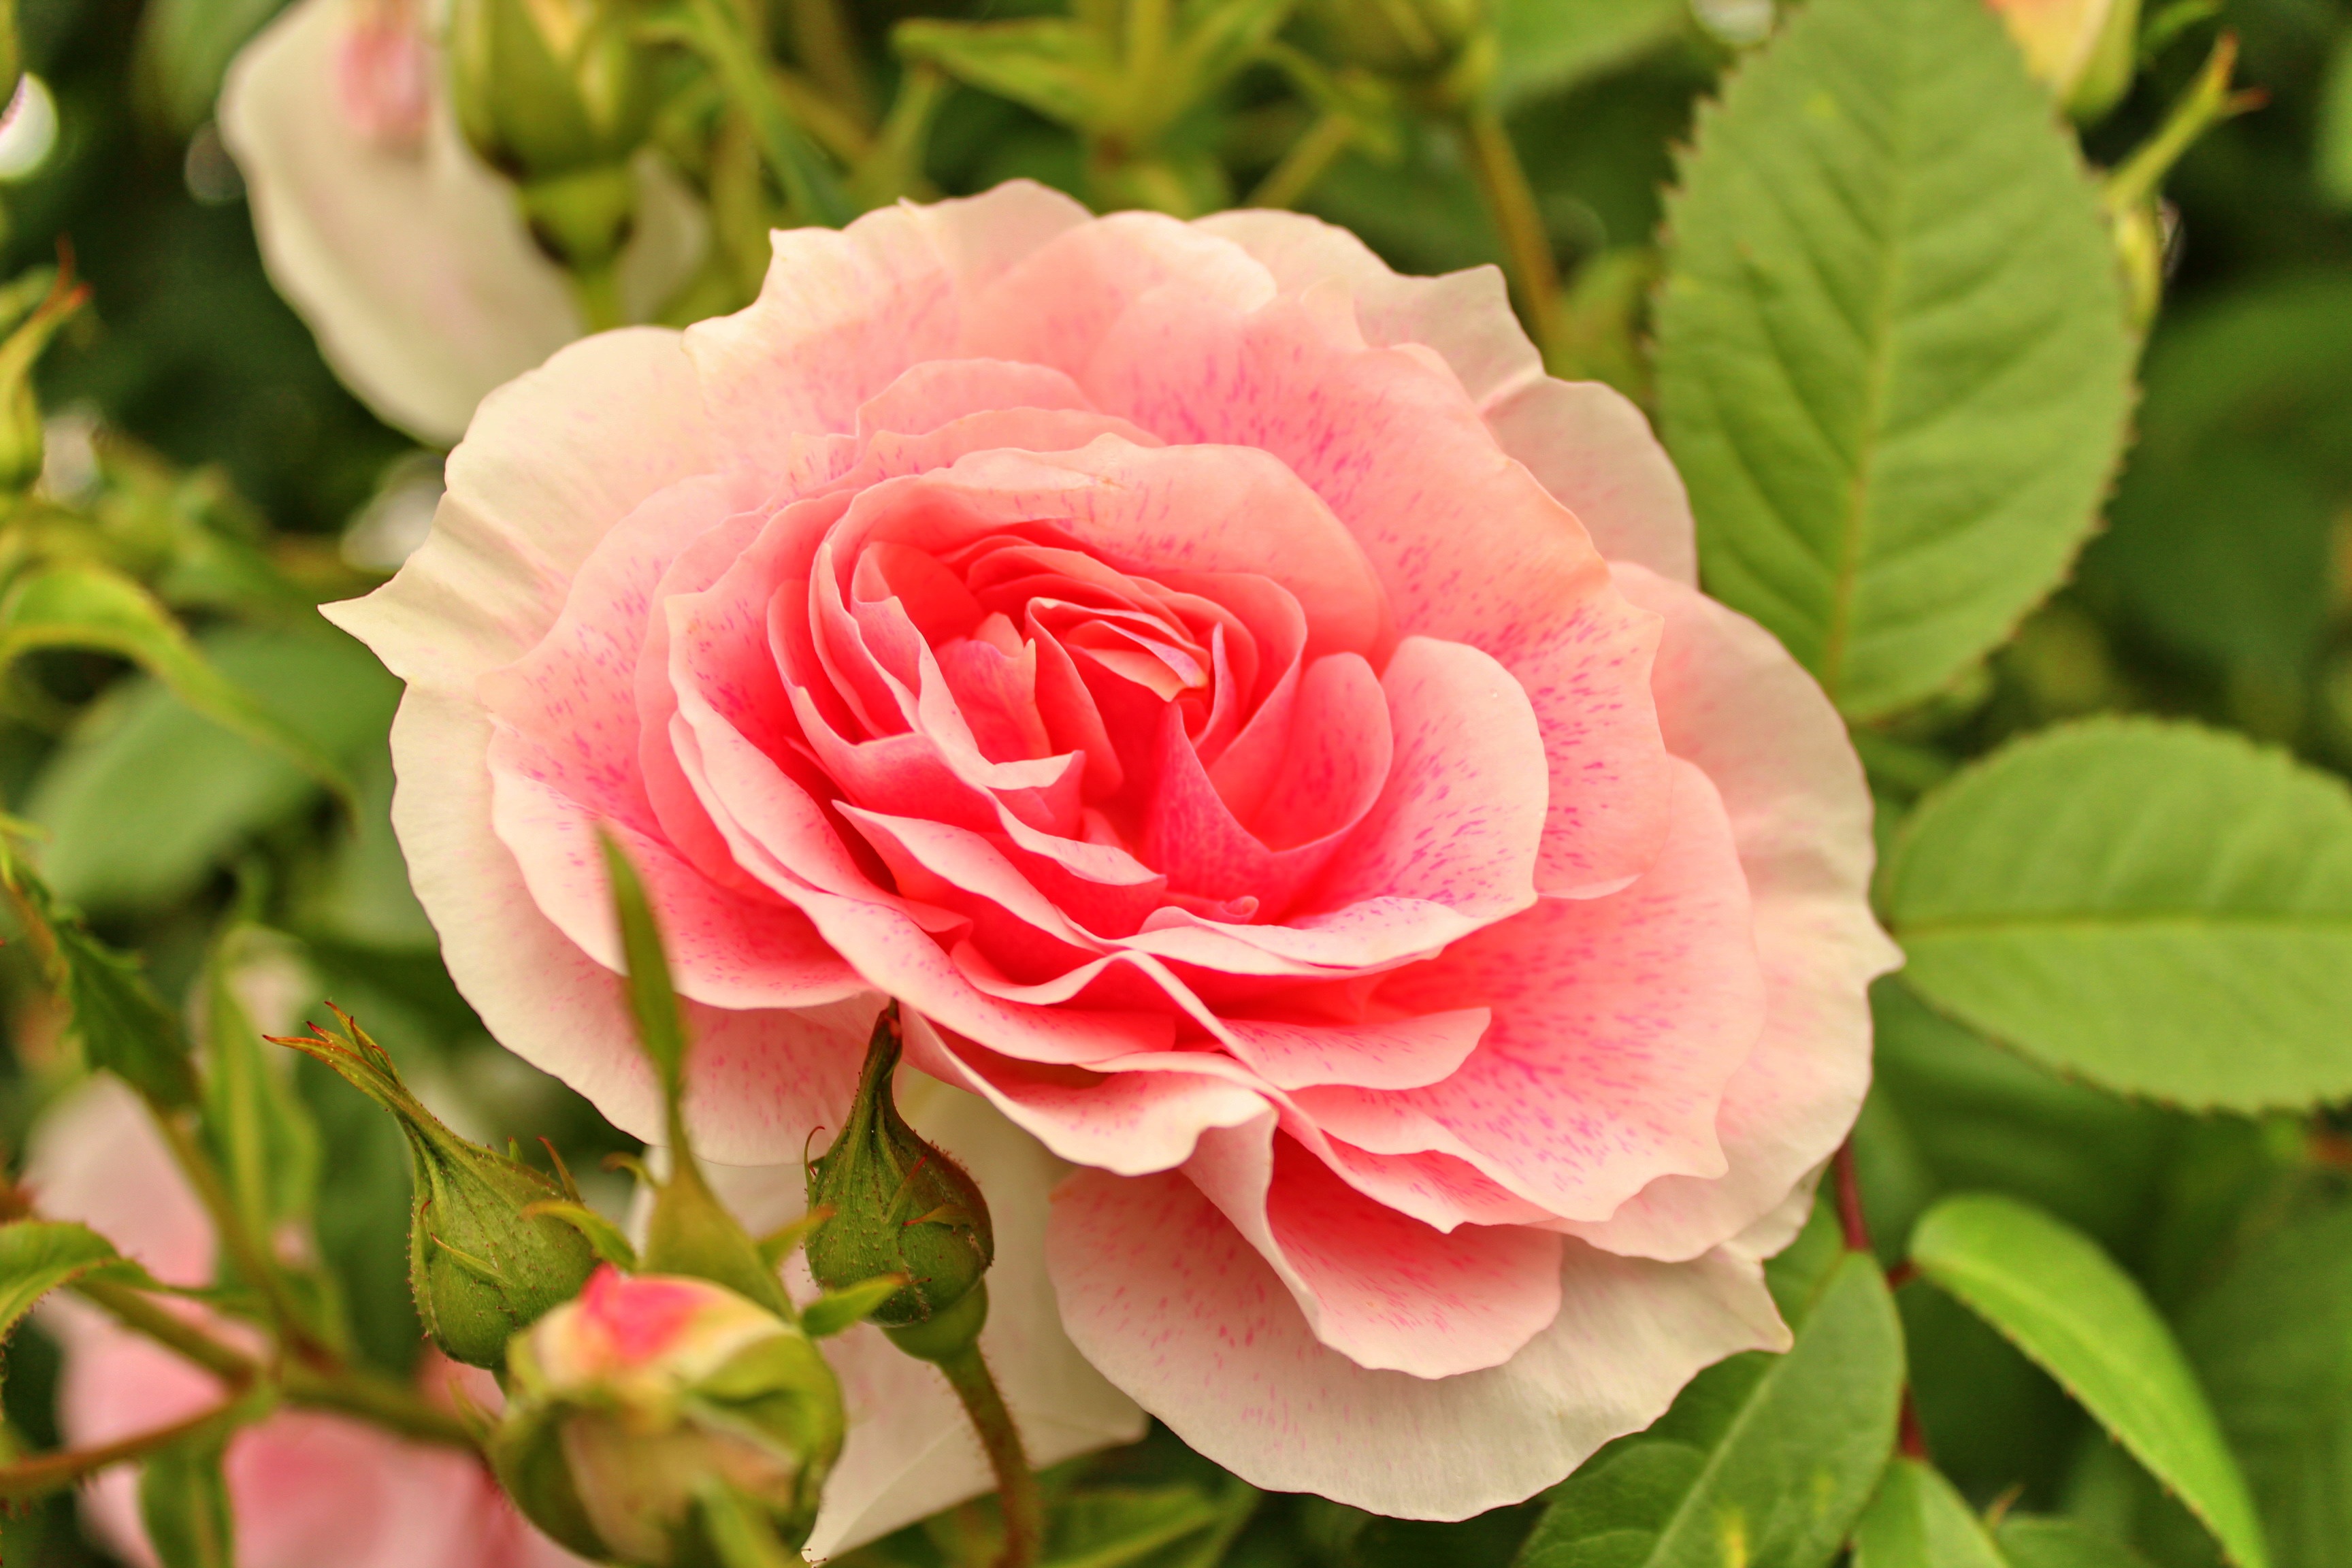 Rosebud, garden plant free image download